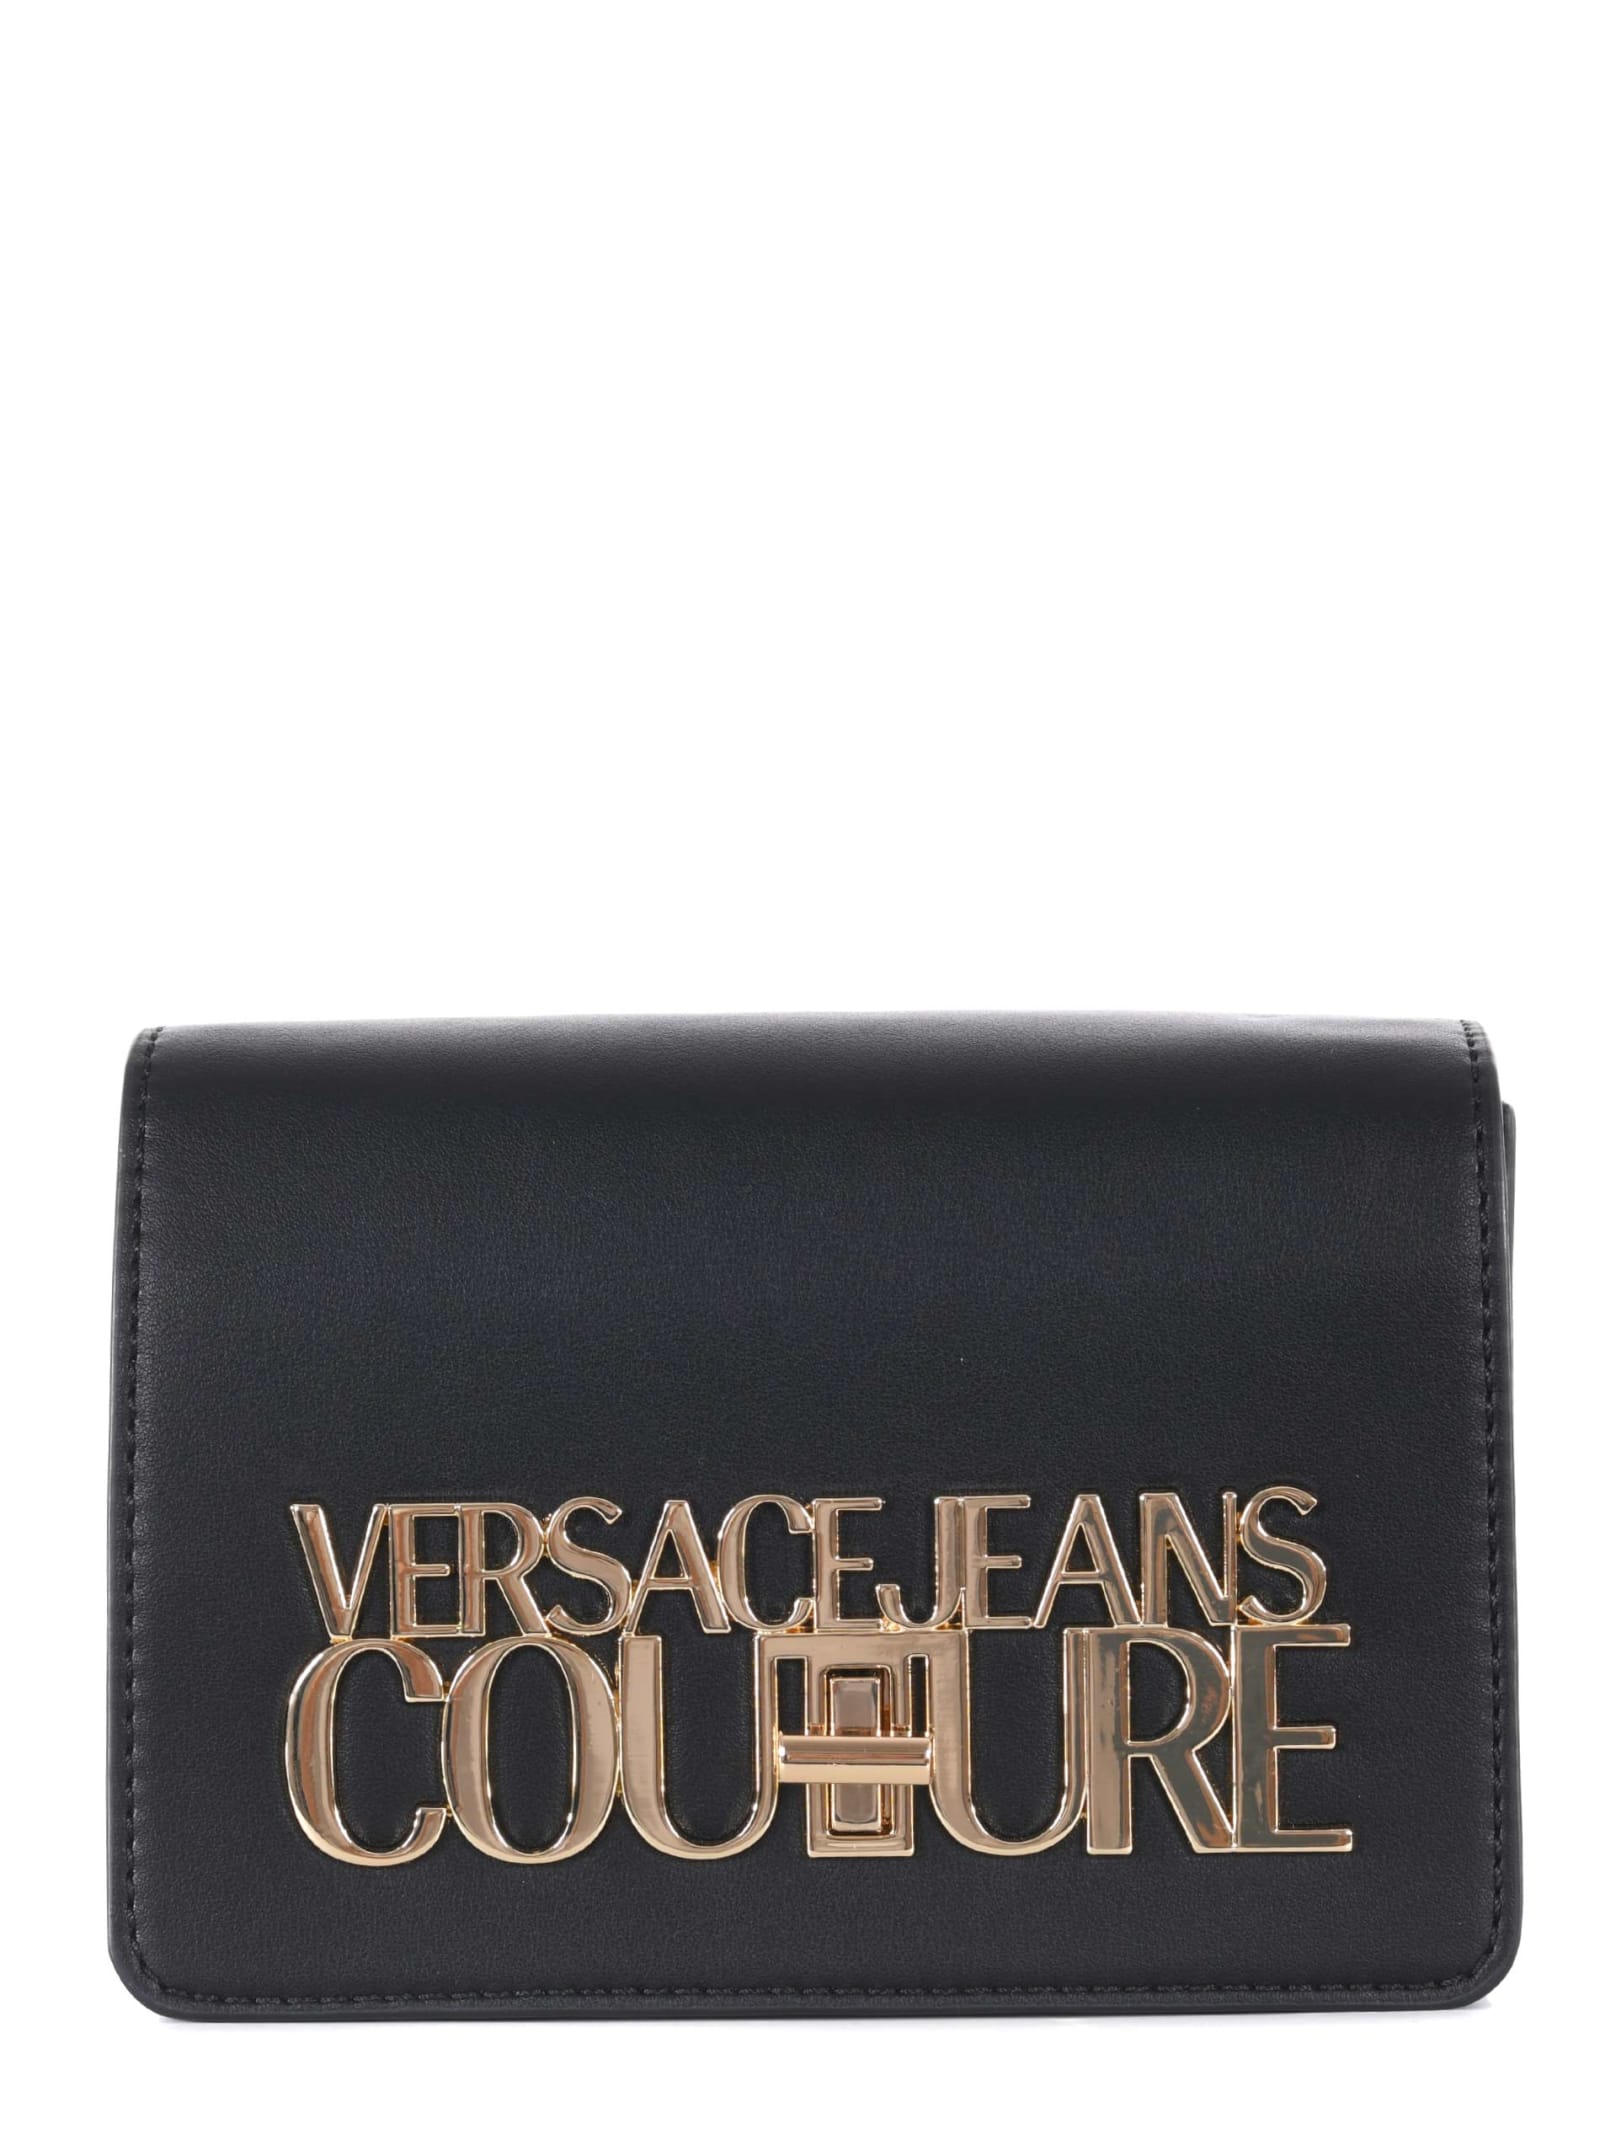 Versace Jeans Couture logo Lock Eco-leather Handbag